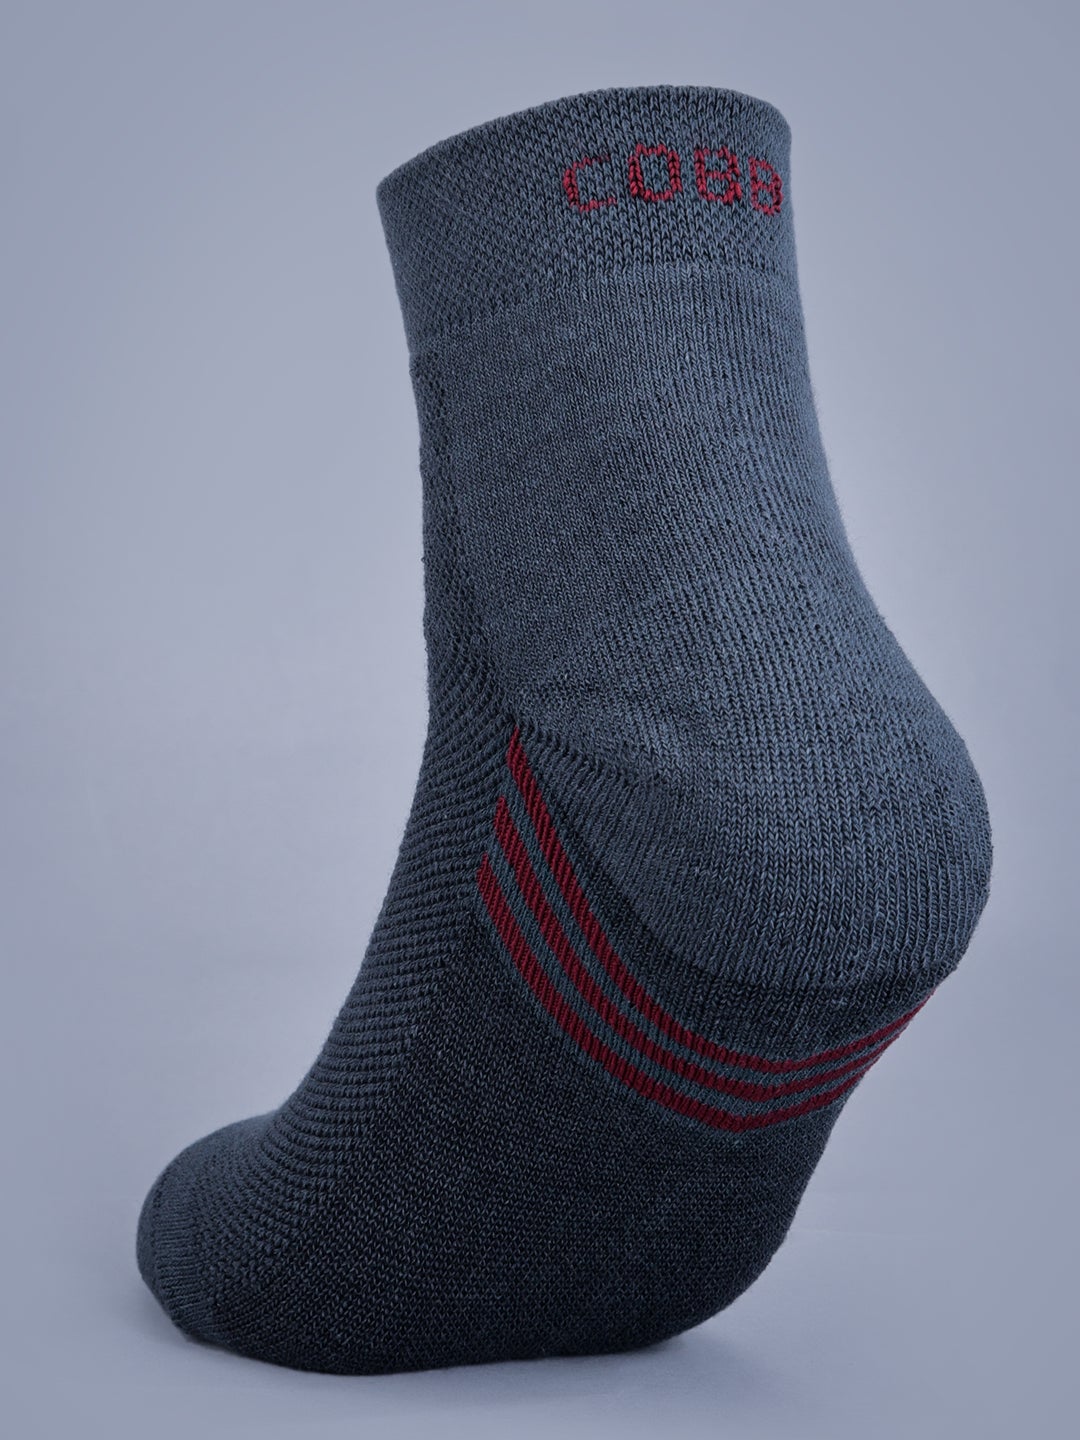 Cobb Dark Grey Full Ankle Socks